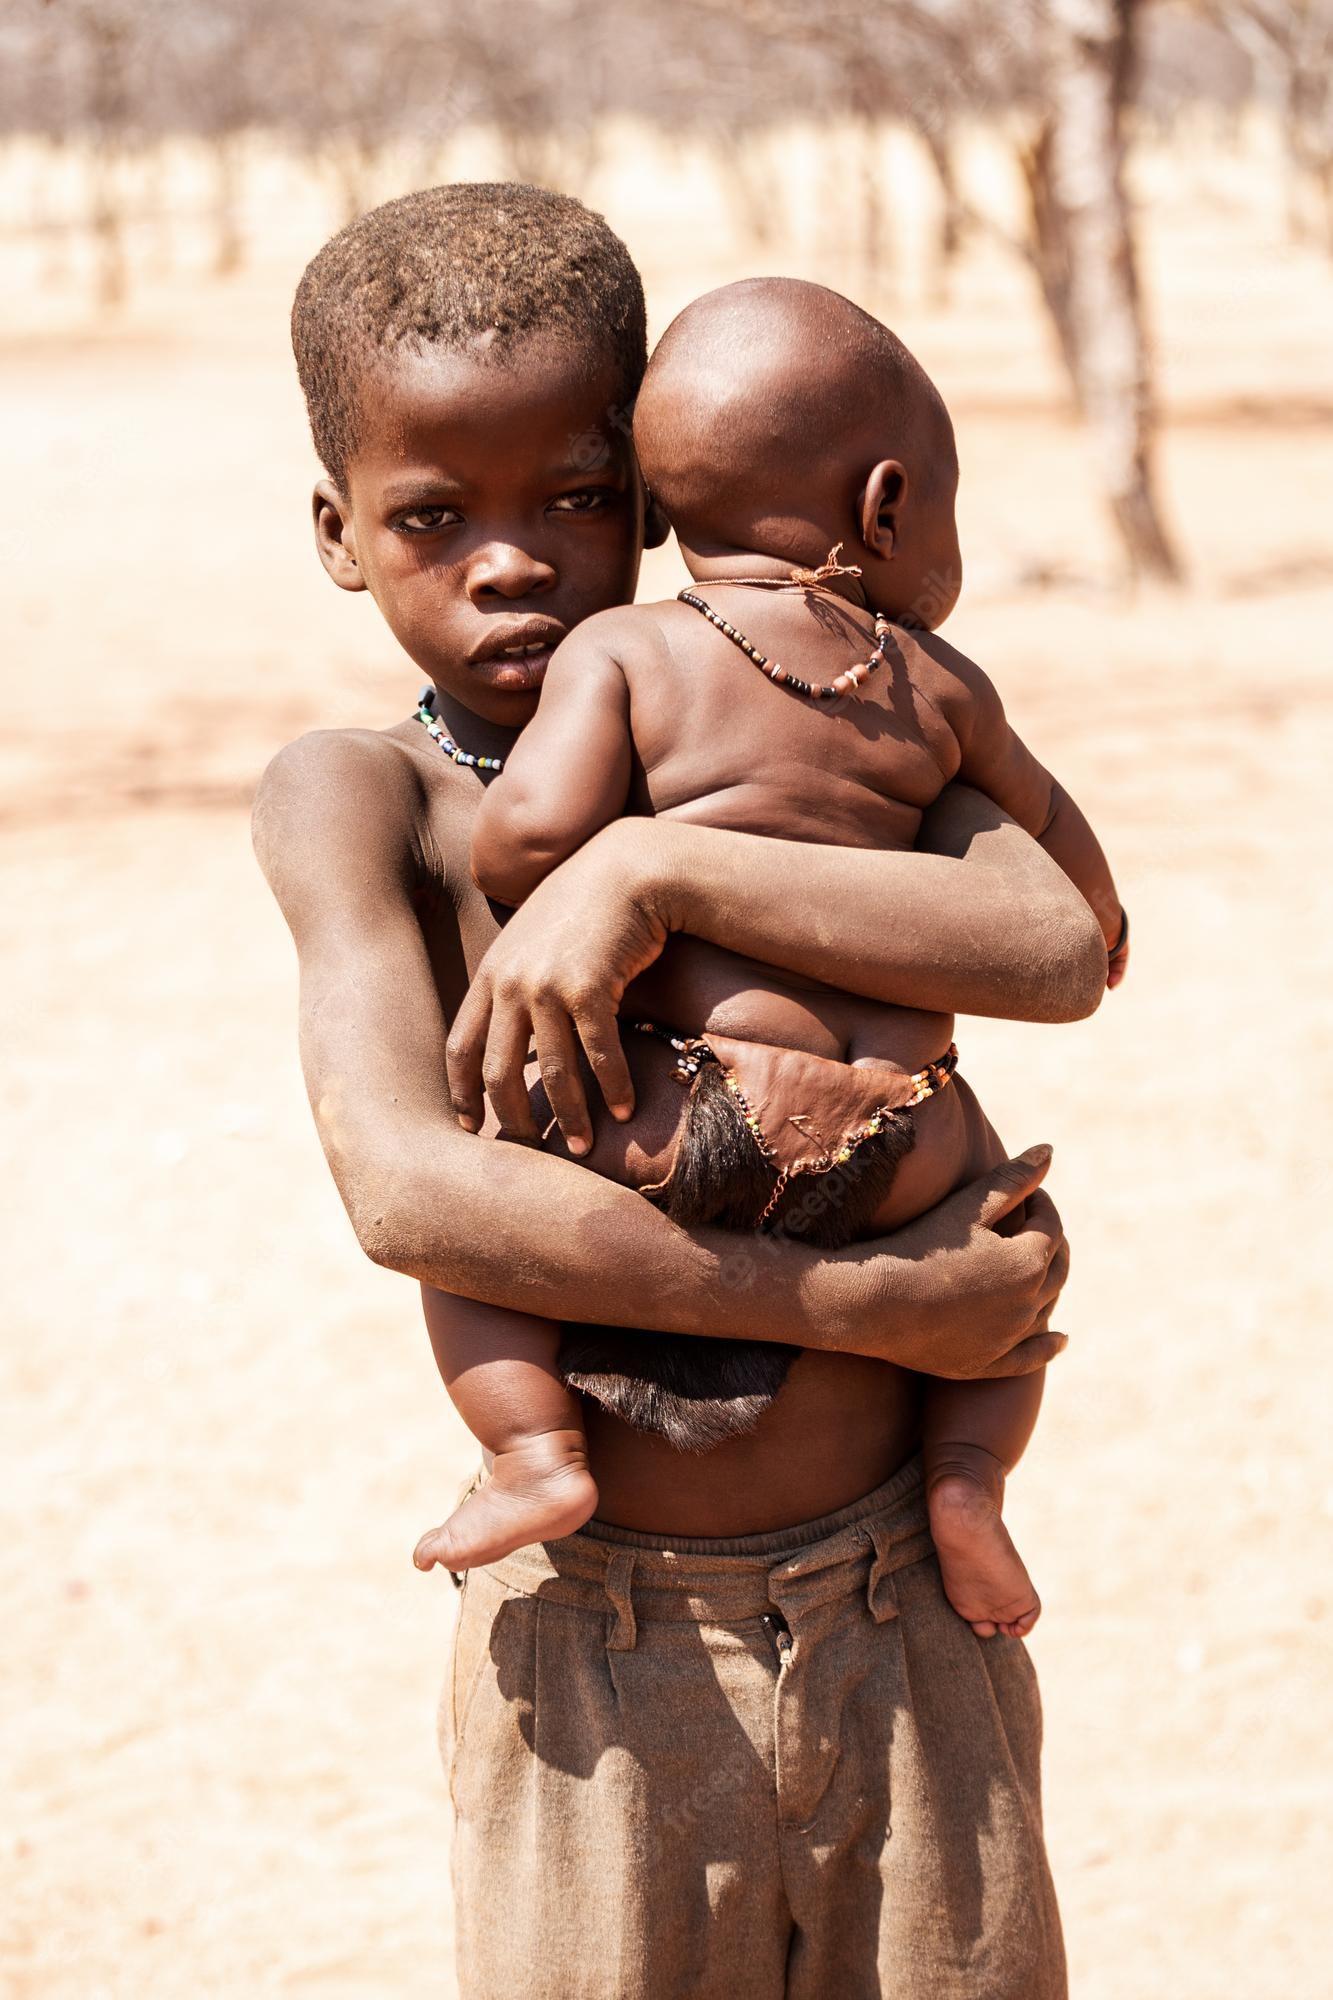 Poverty african children Image. Free Vectors, & PSD